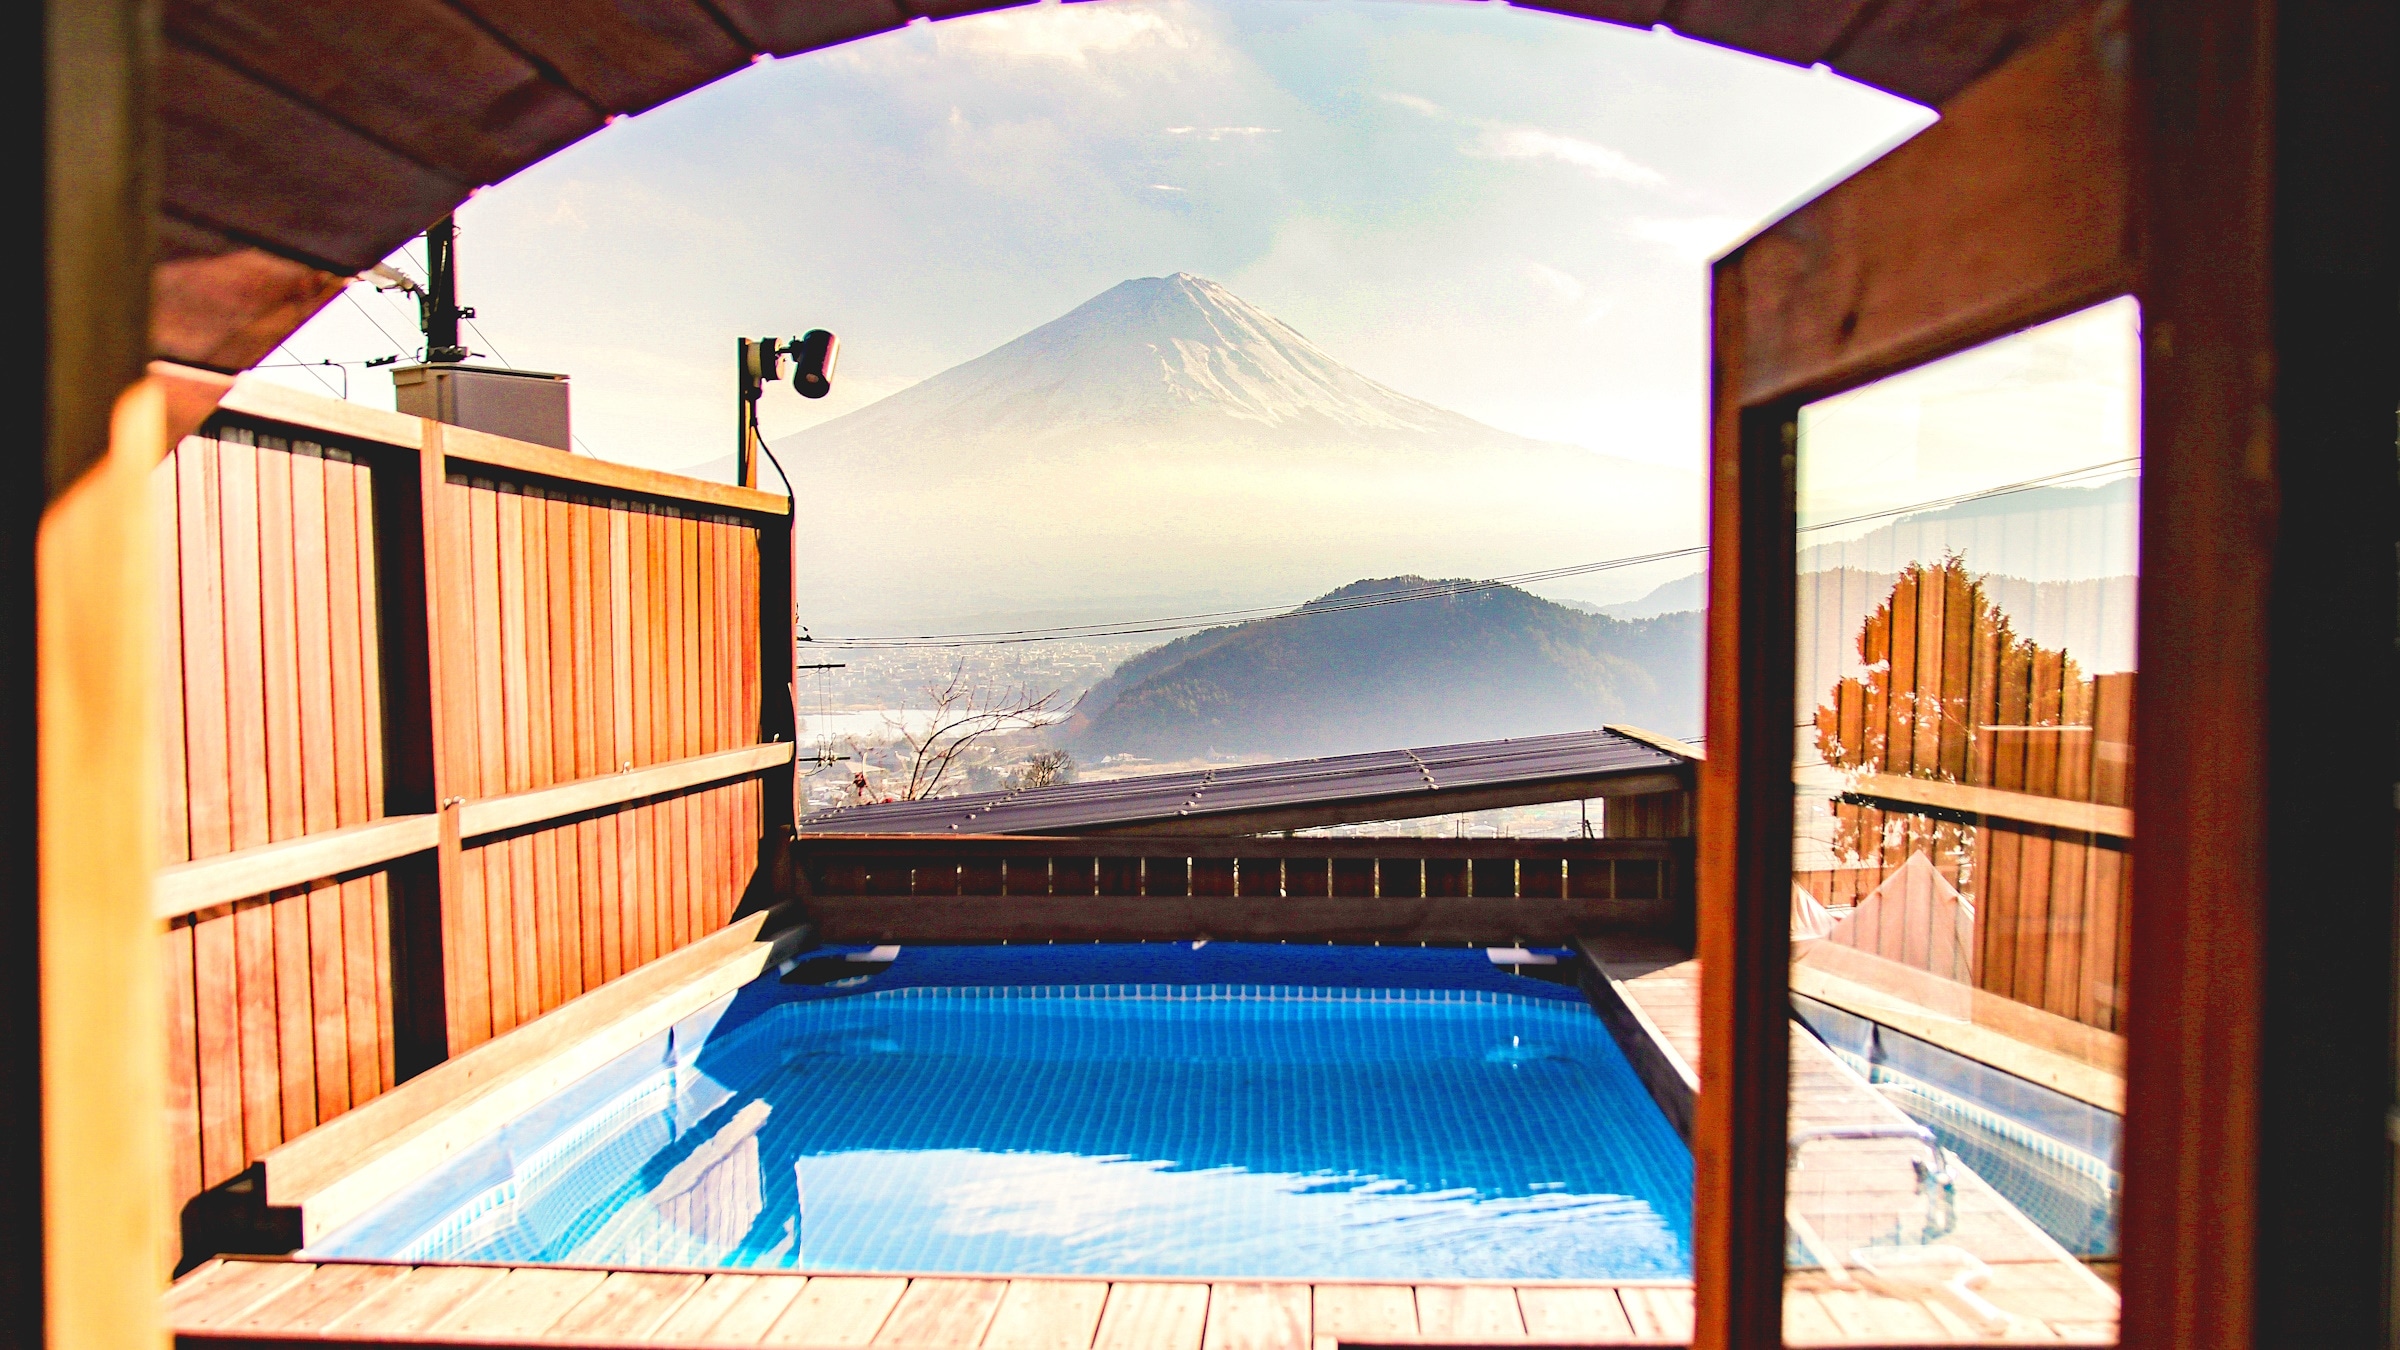 Fuji seen from the sauna.